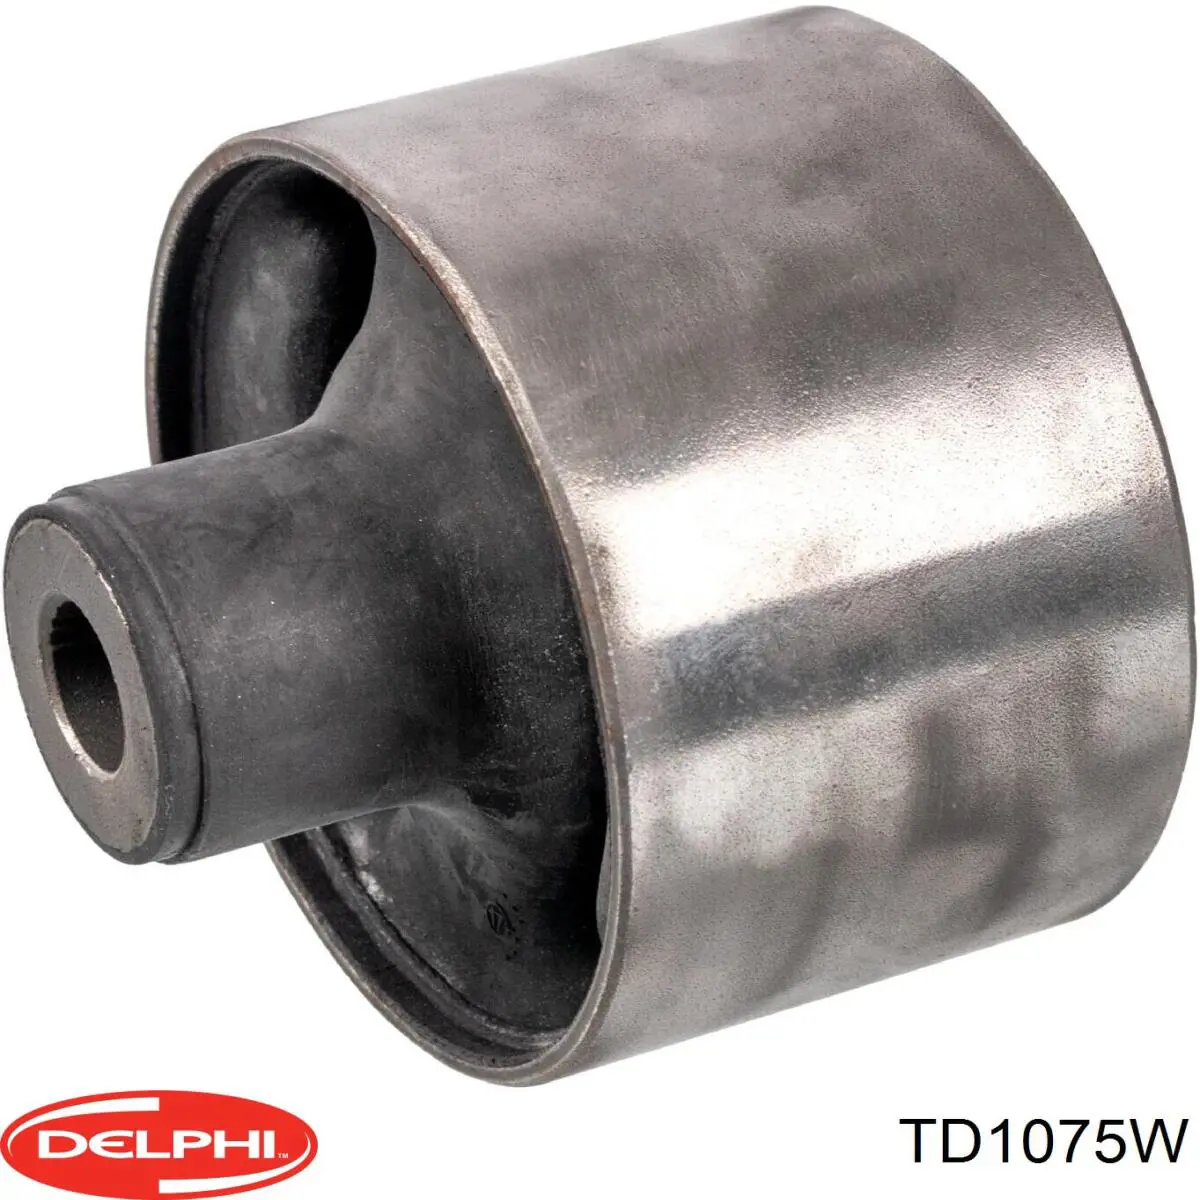 TD1075W Delphi bloco silencioso dianteiro de braço oscilante traseiro longitudinal